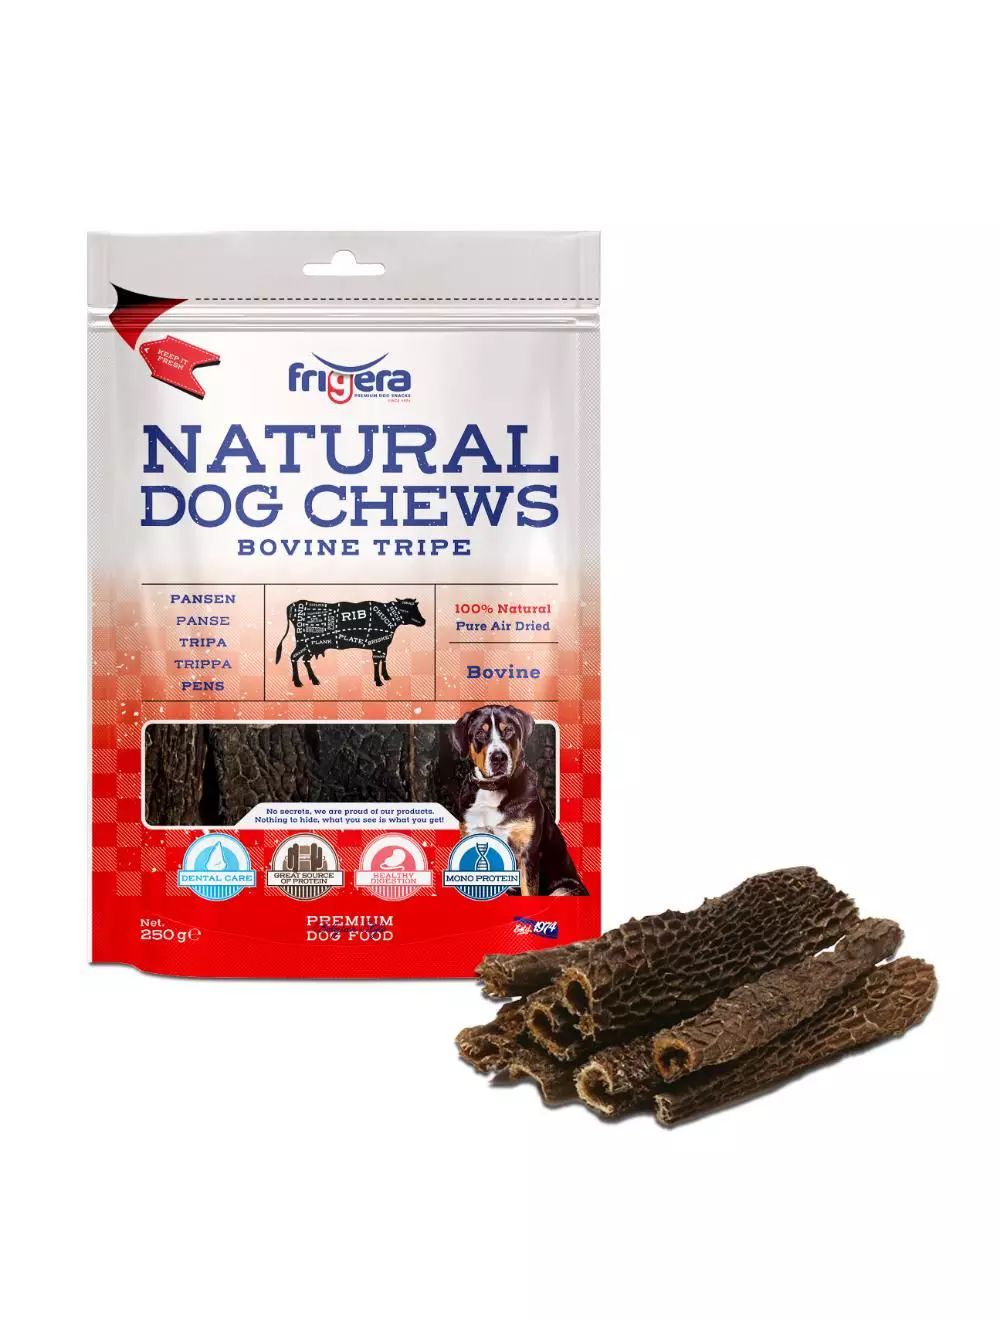 Frigera Natural Dog Chews Bovine Tripe